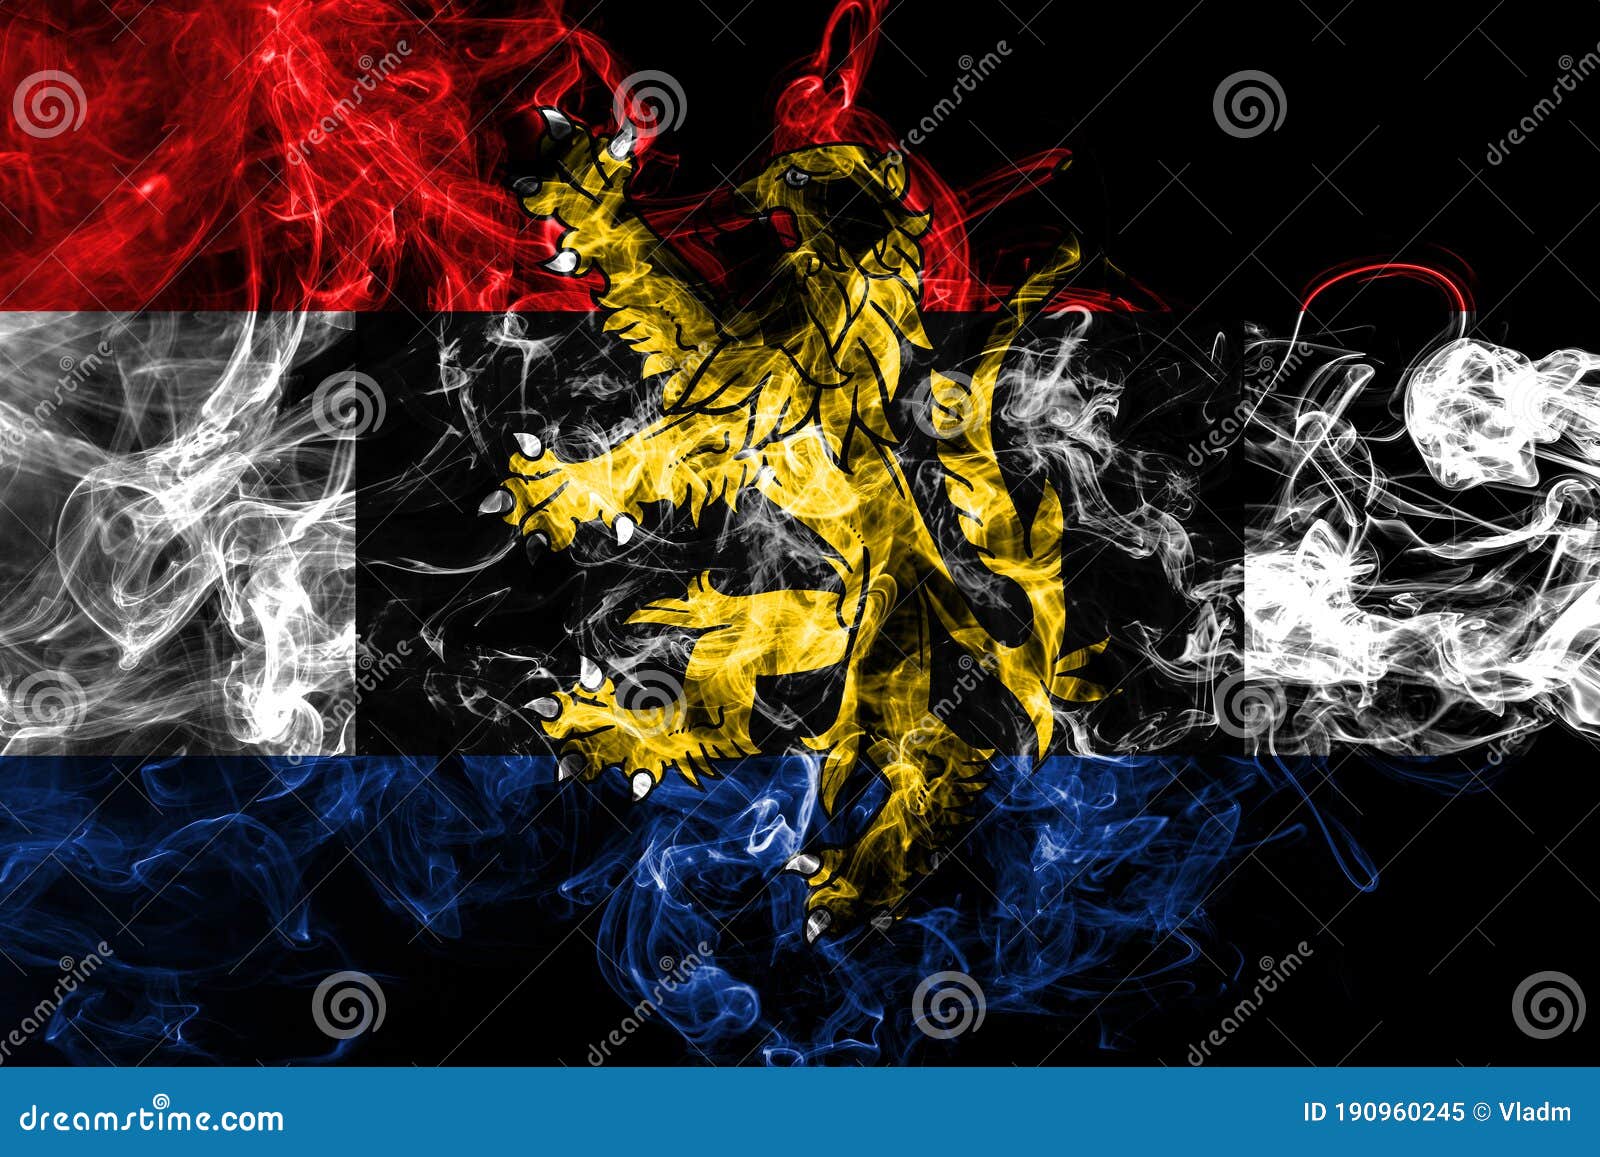 benelux smoke flag,  politico-economic union of  belgium, netherlands, luxembourg